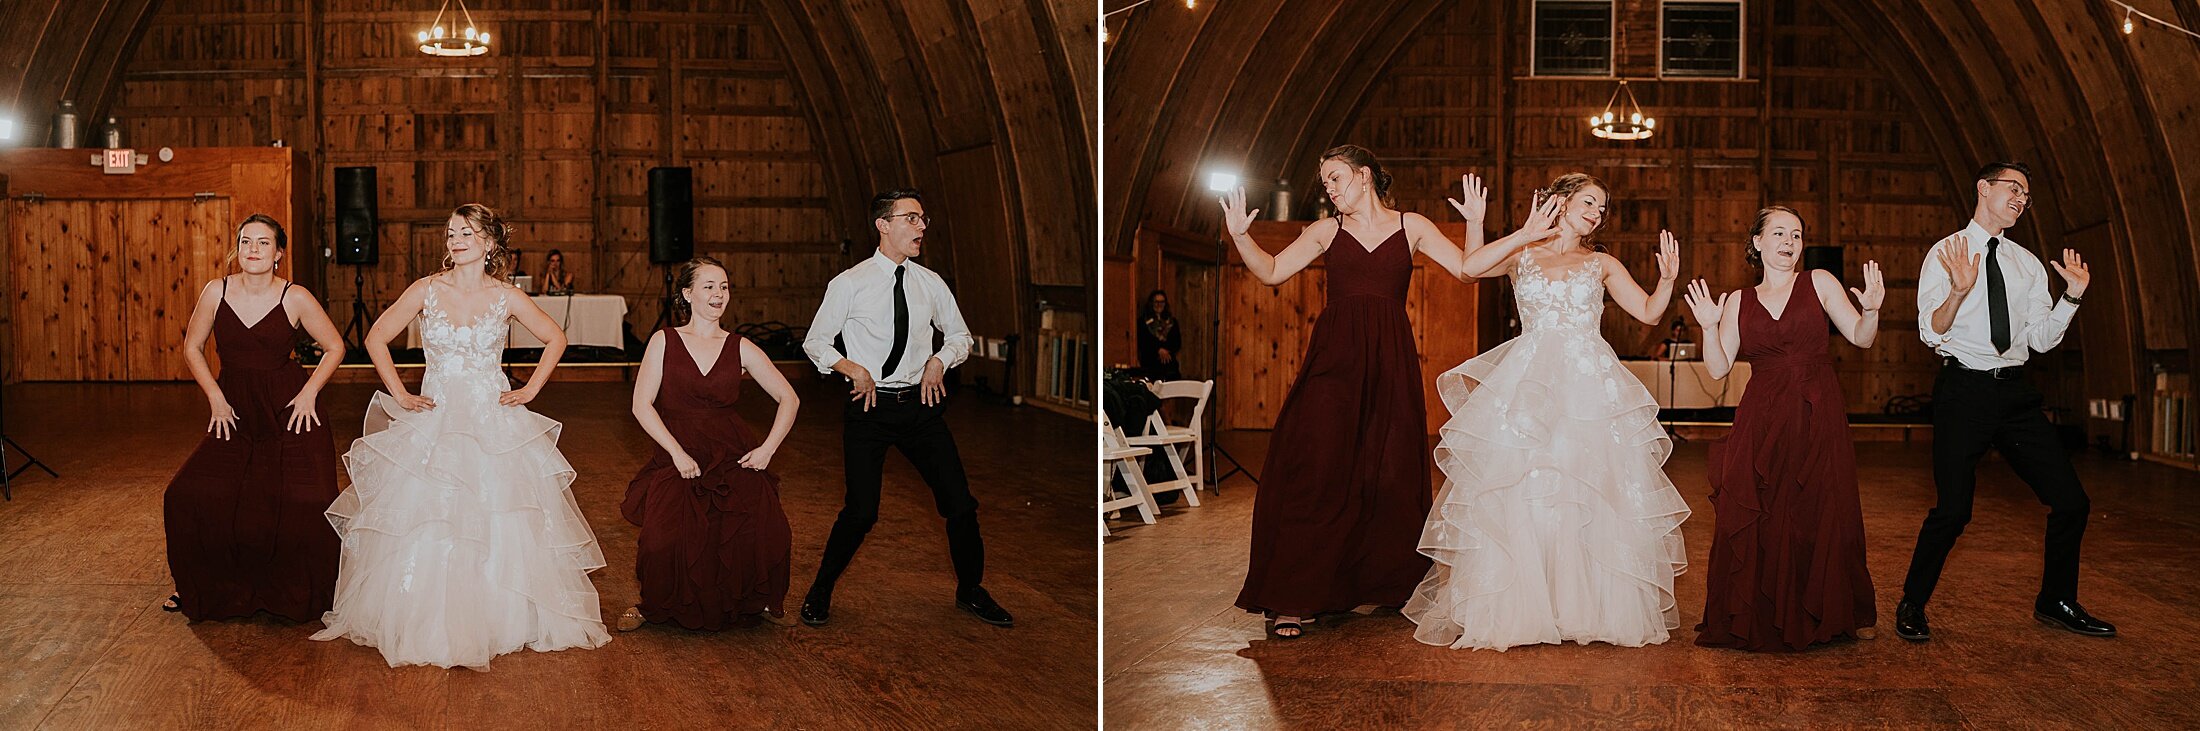 stevens point winter wedding erons event barn sibling dance